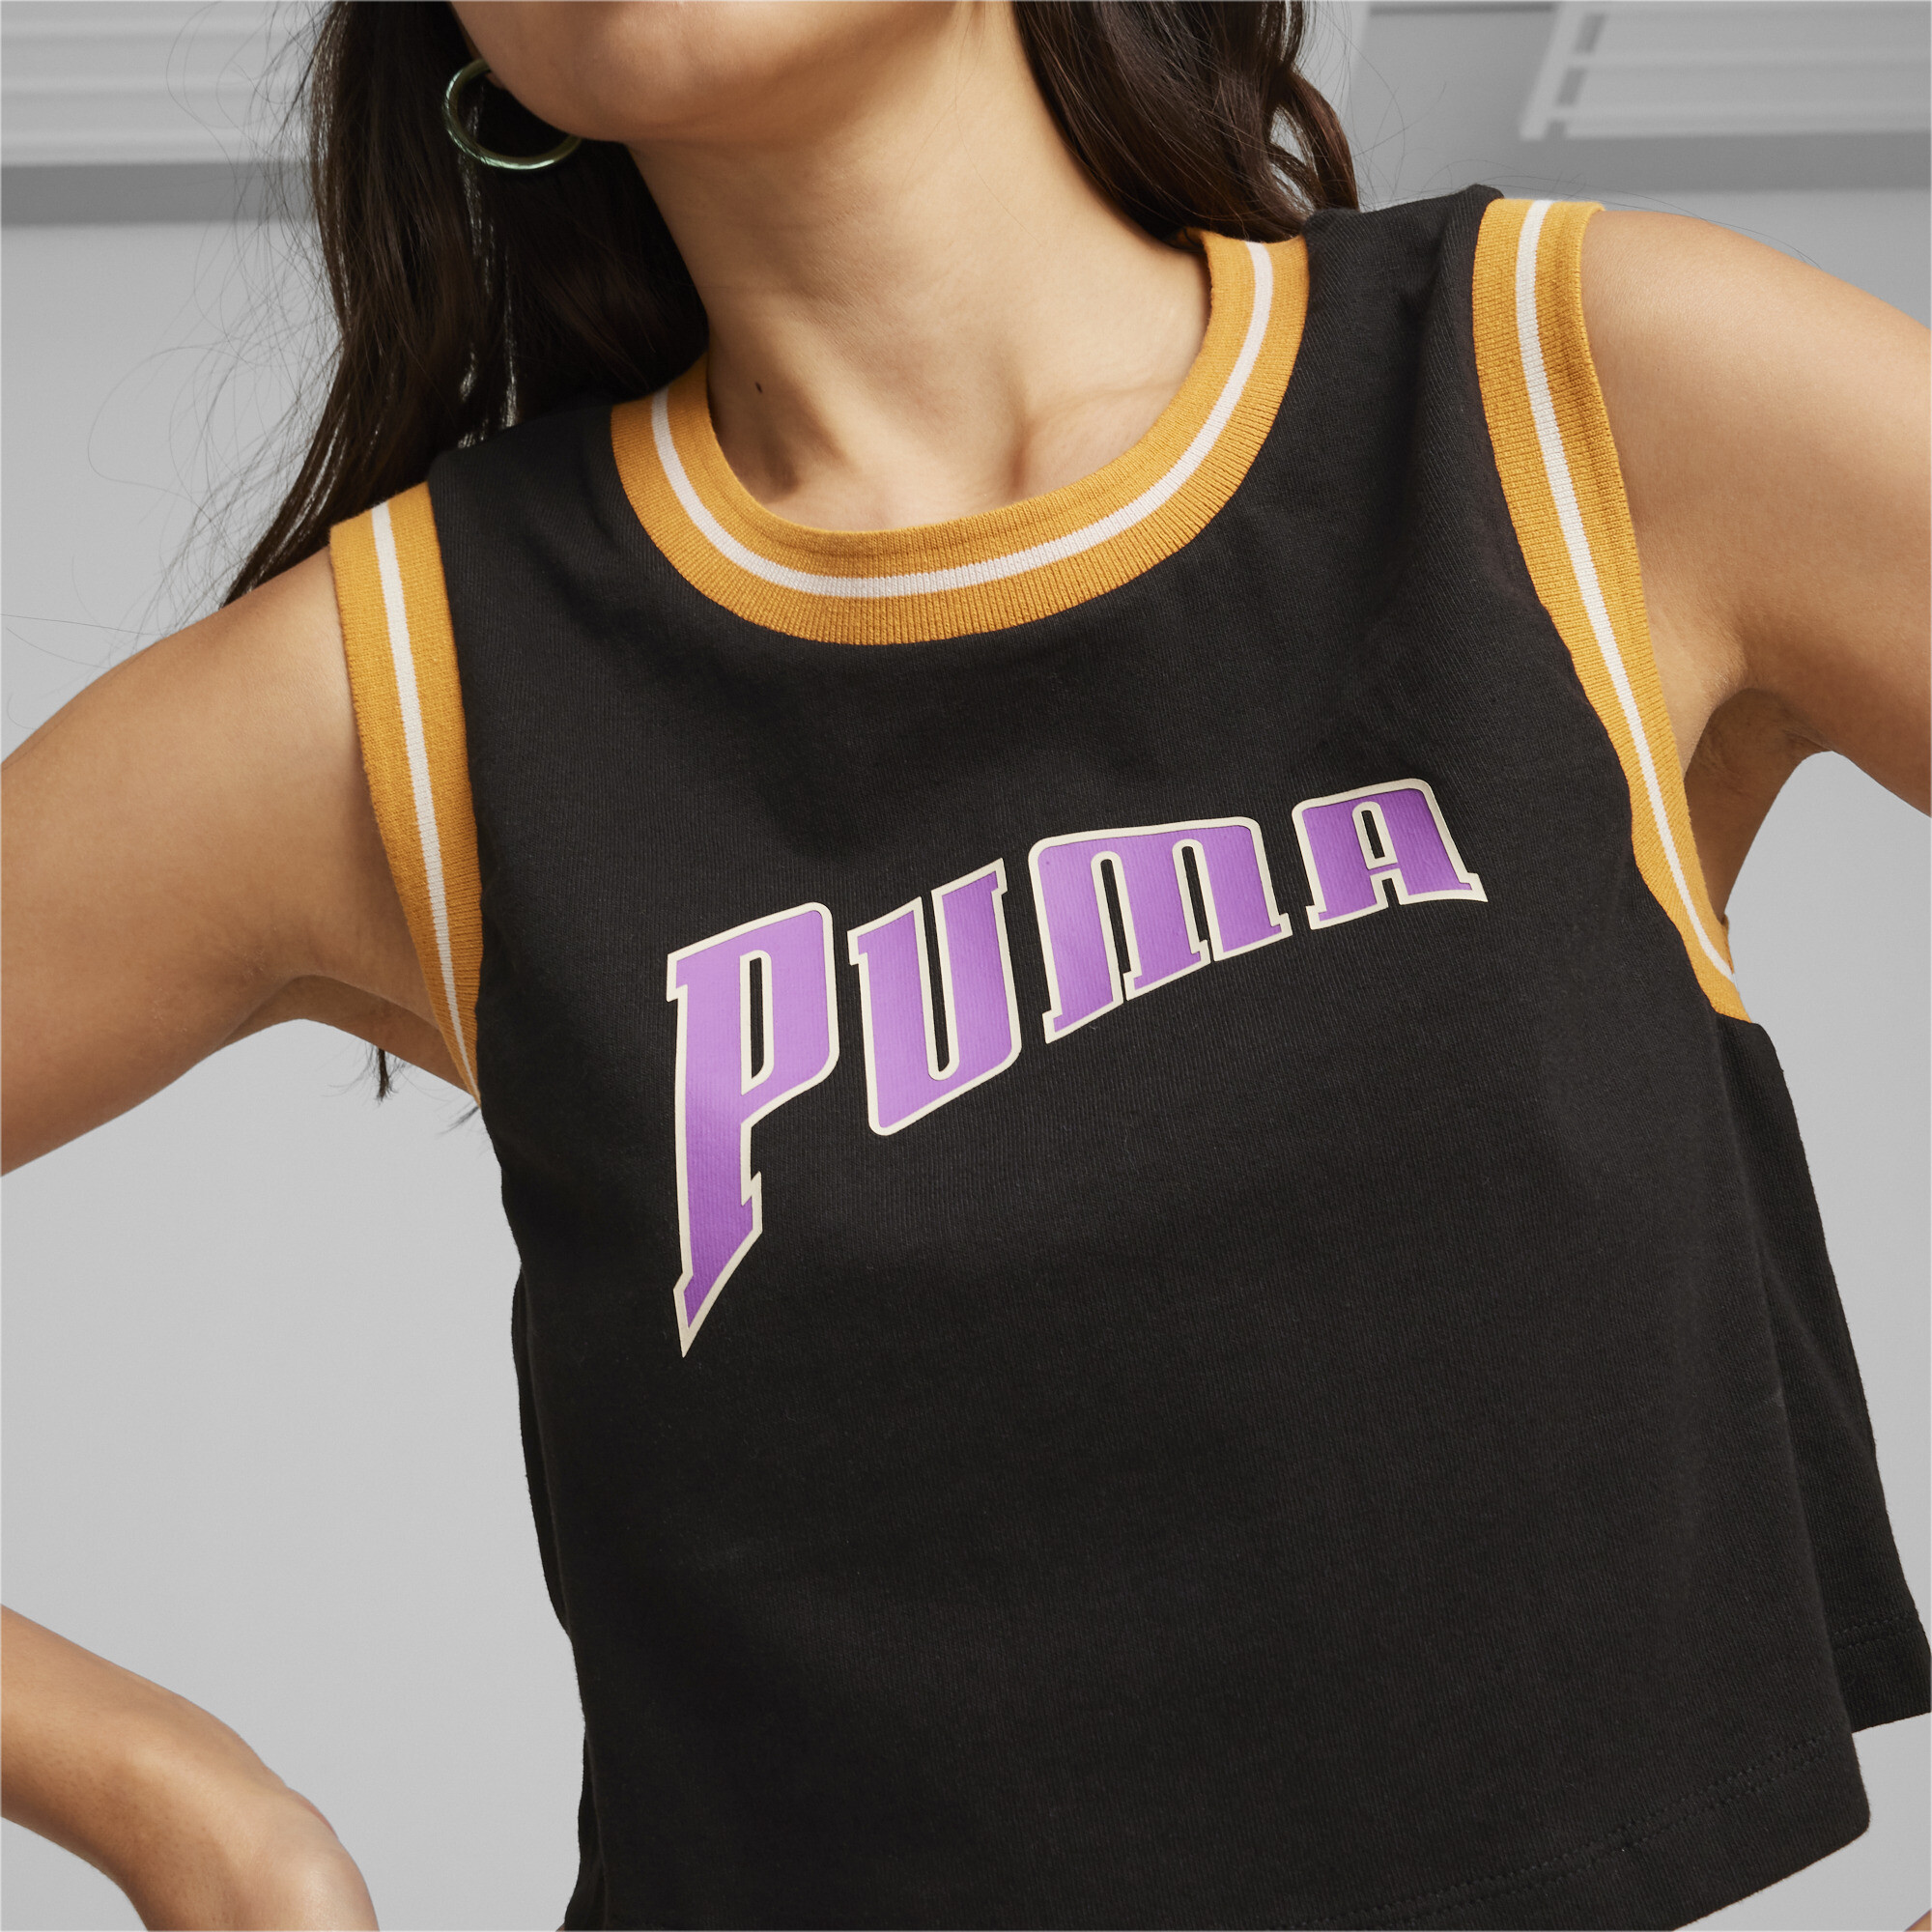 Women's PUMA TEAM Graphic Crop Top In Black, Size Small